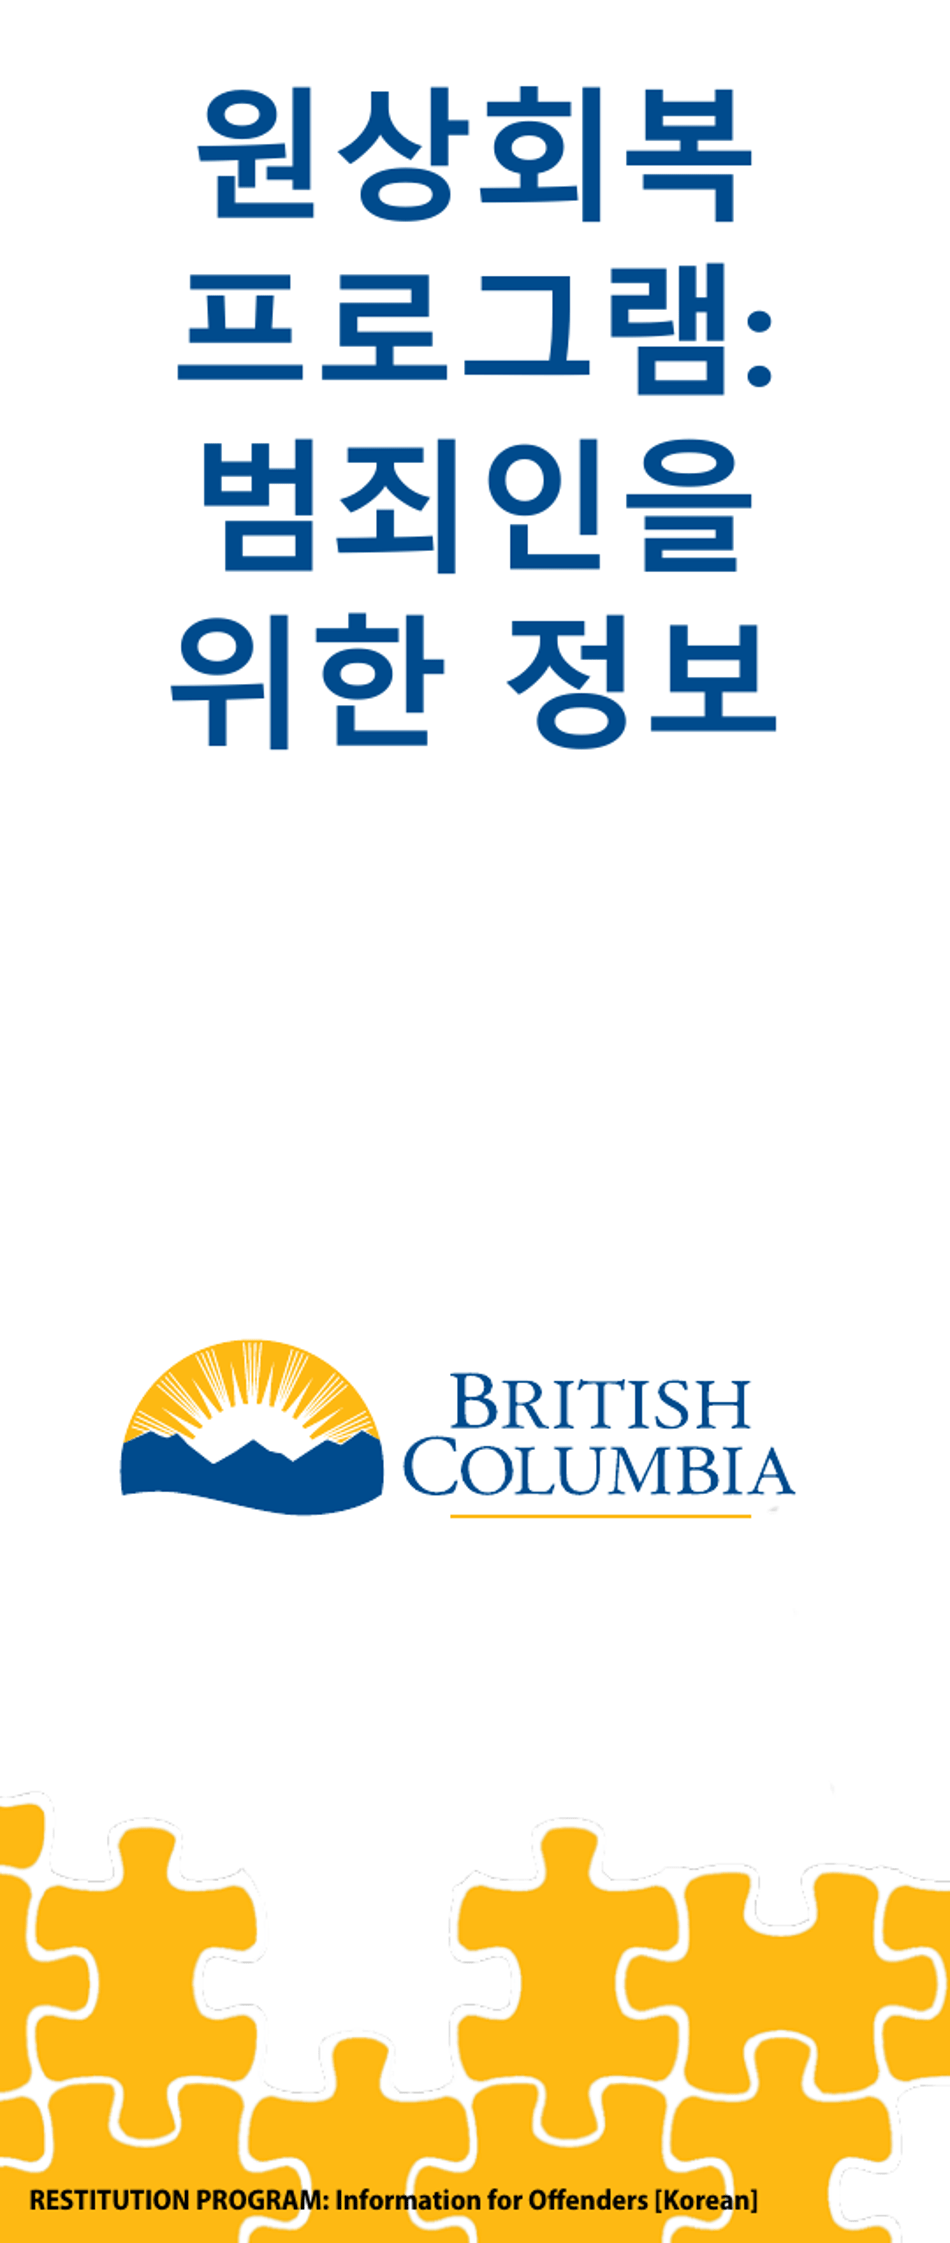 Restitution Program Application Form - British Columbia, Canada (English / Korean), Page 1